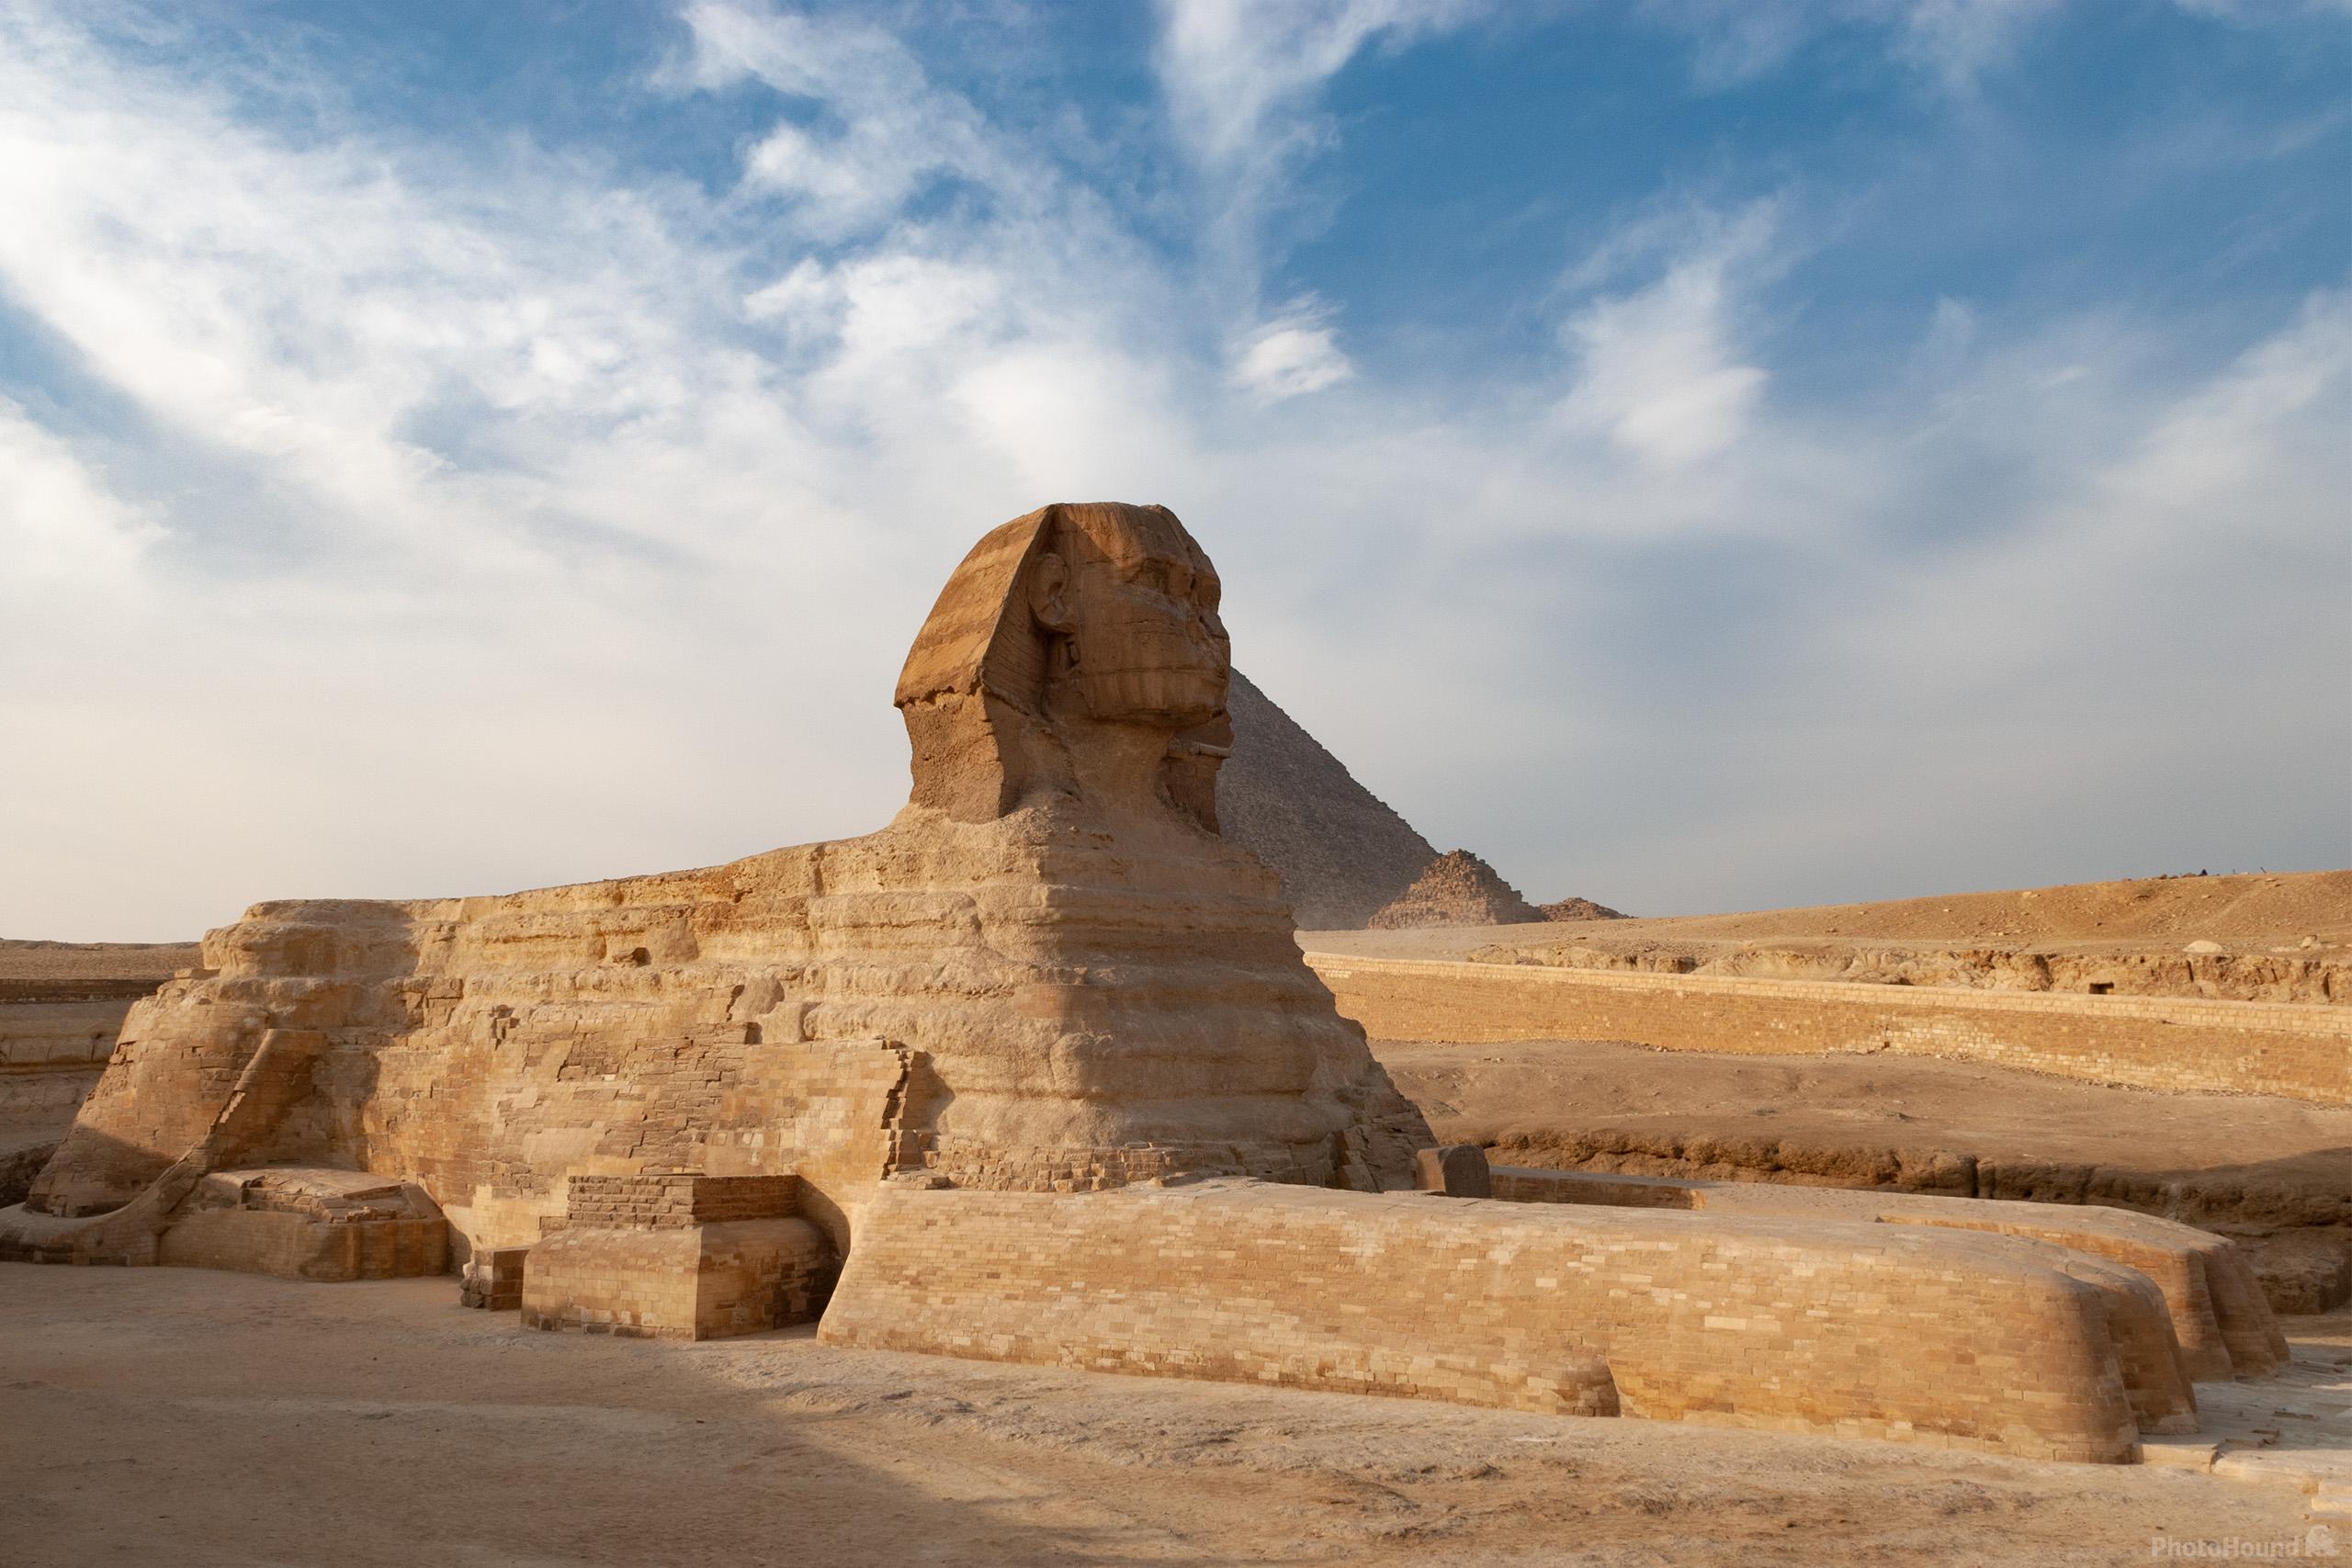 Image of Great Sphinx of Giza by Luka Esenko